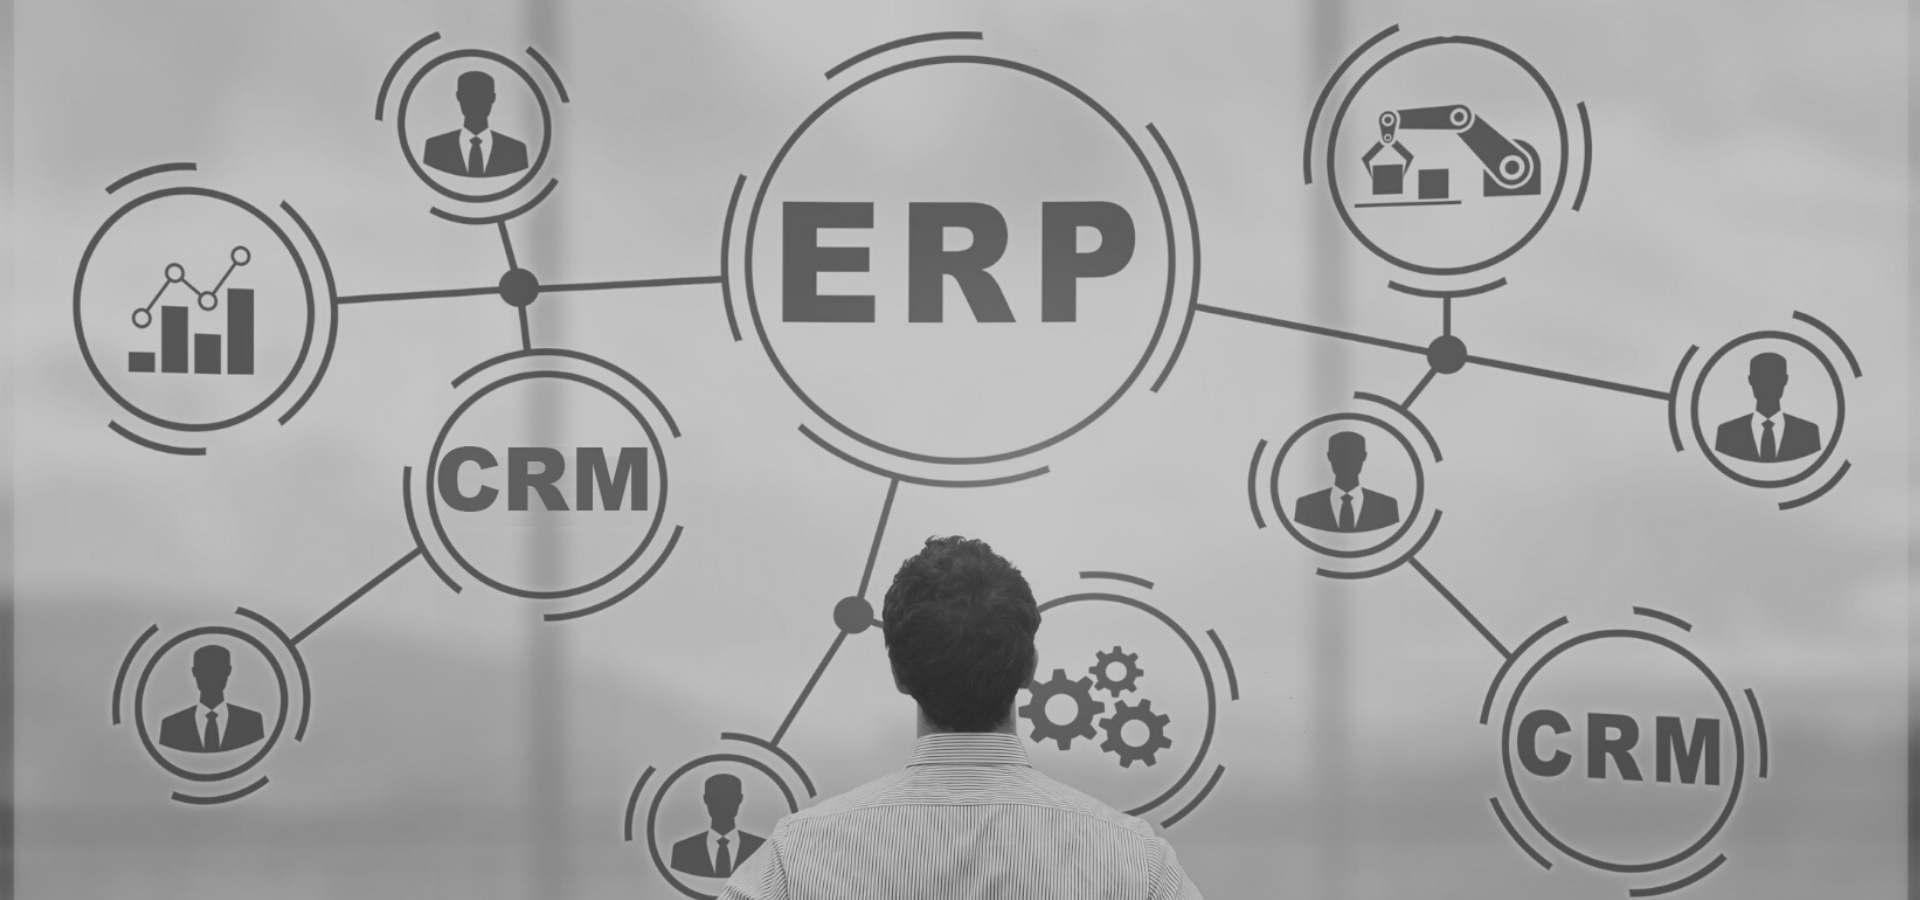 Divy vos solutions ERP / CRM